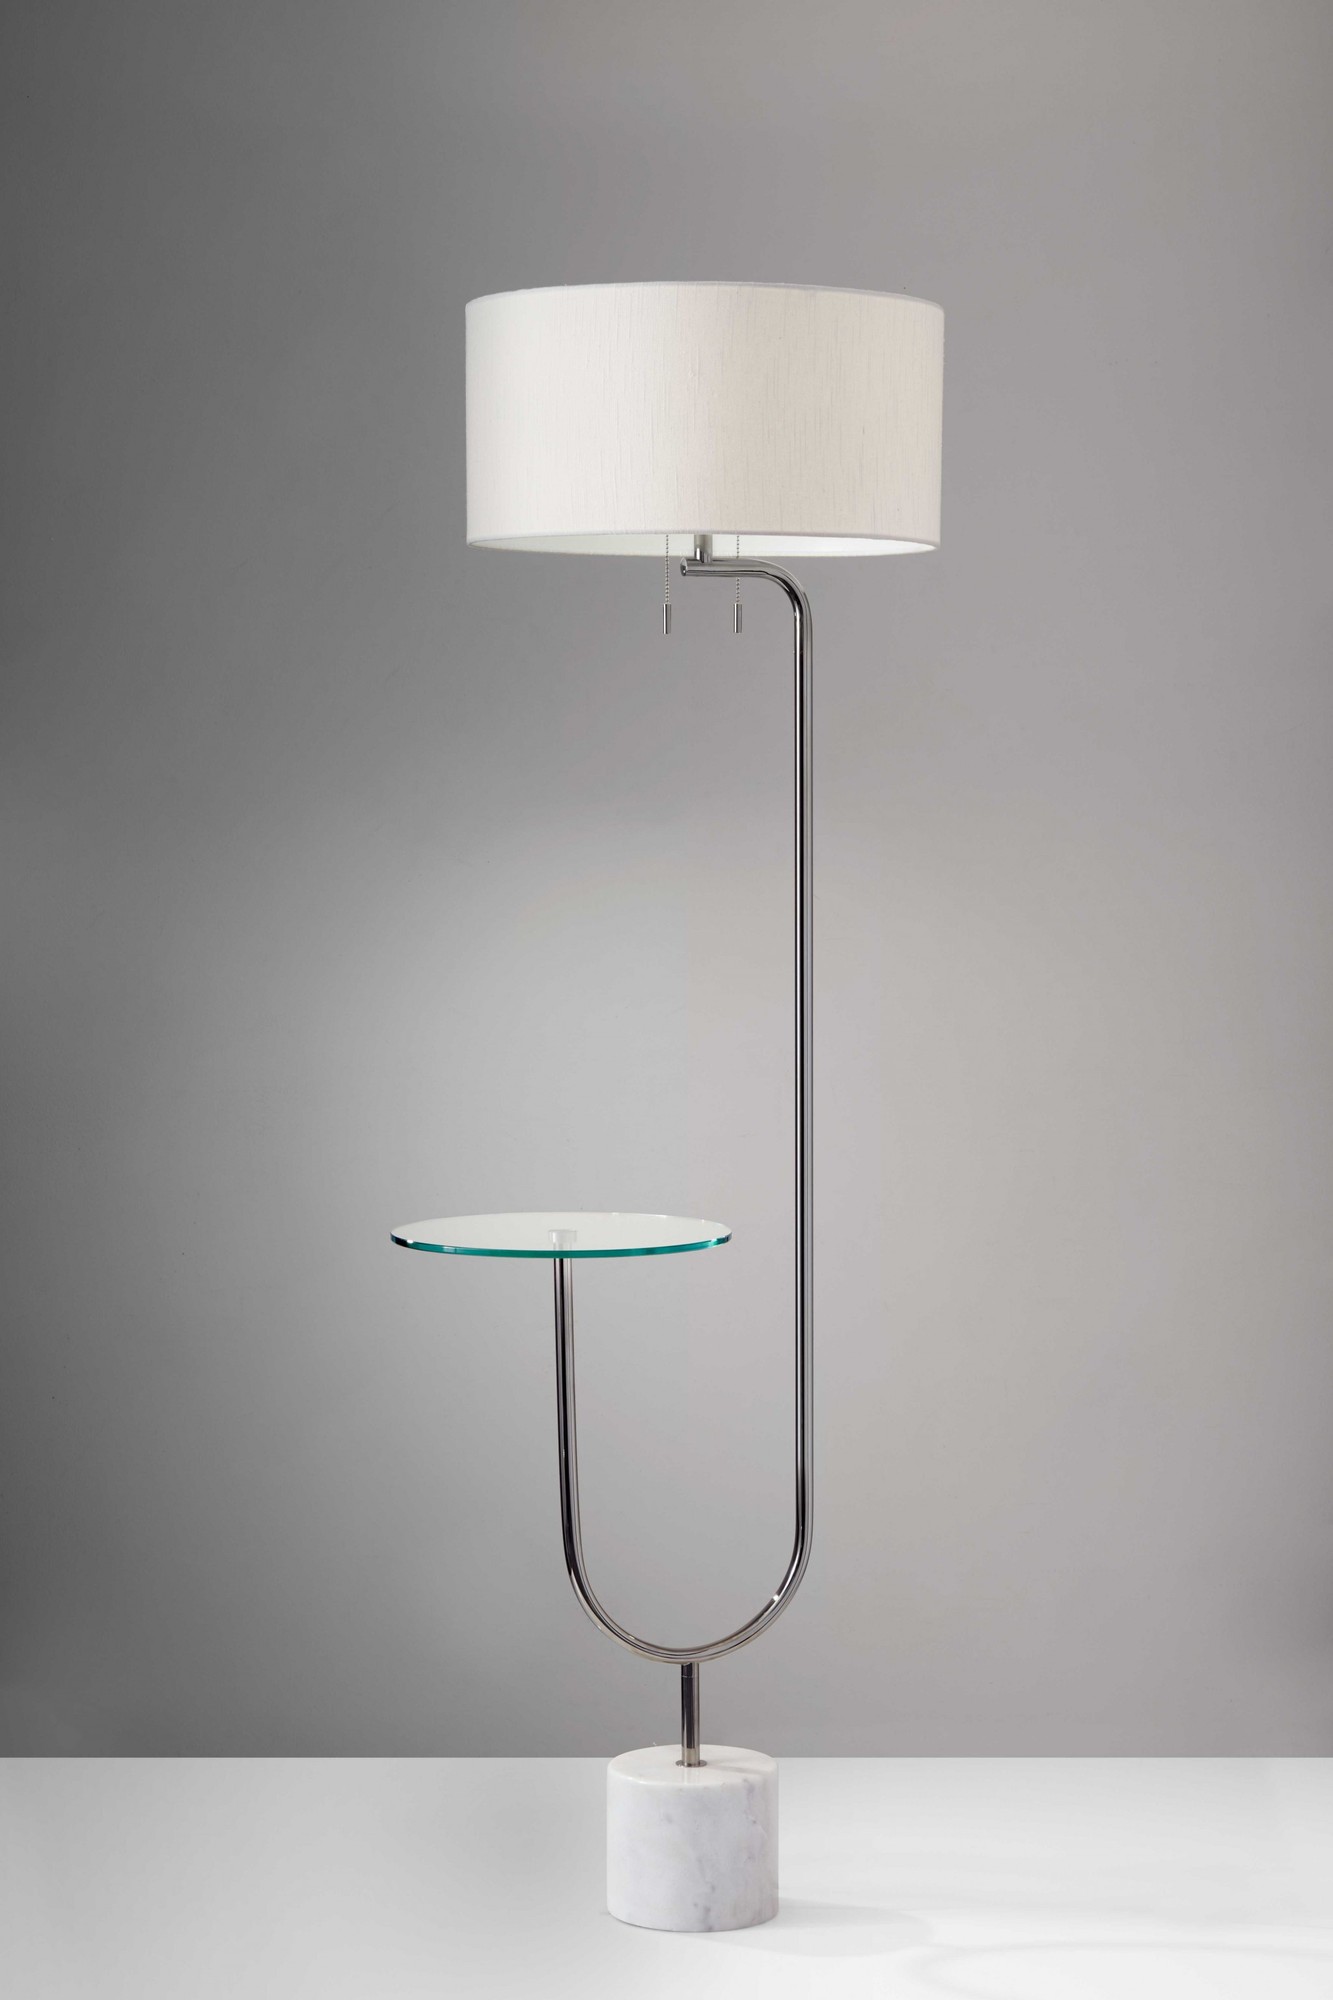 19" X 22.5" X 65" Chrome Glass Metal Shelf Floor Lamp